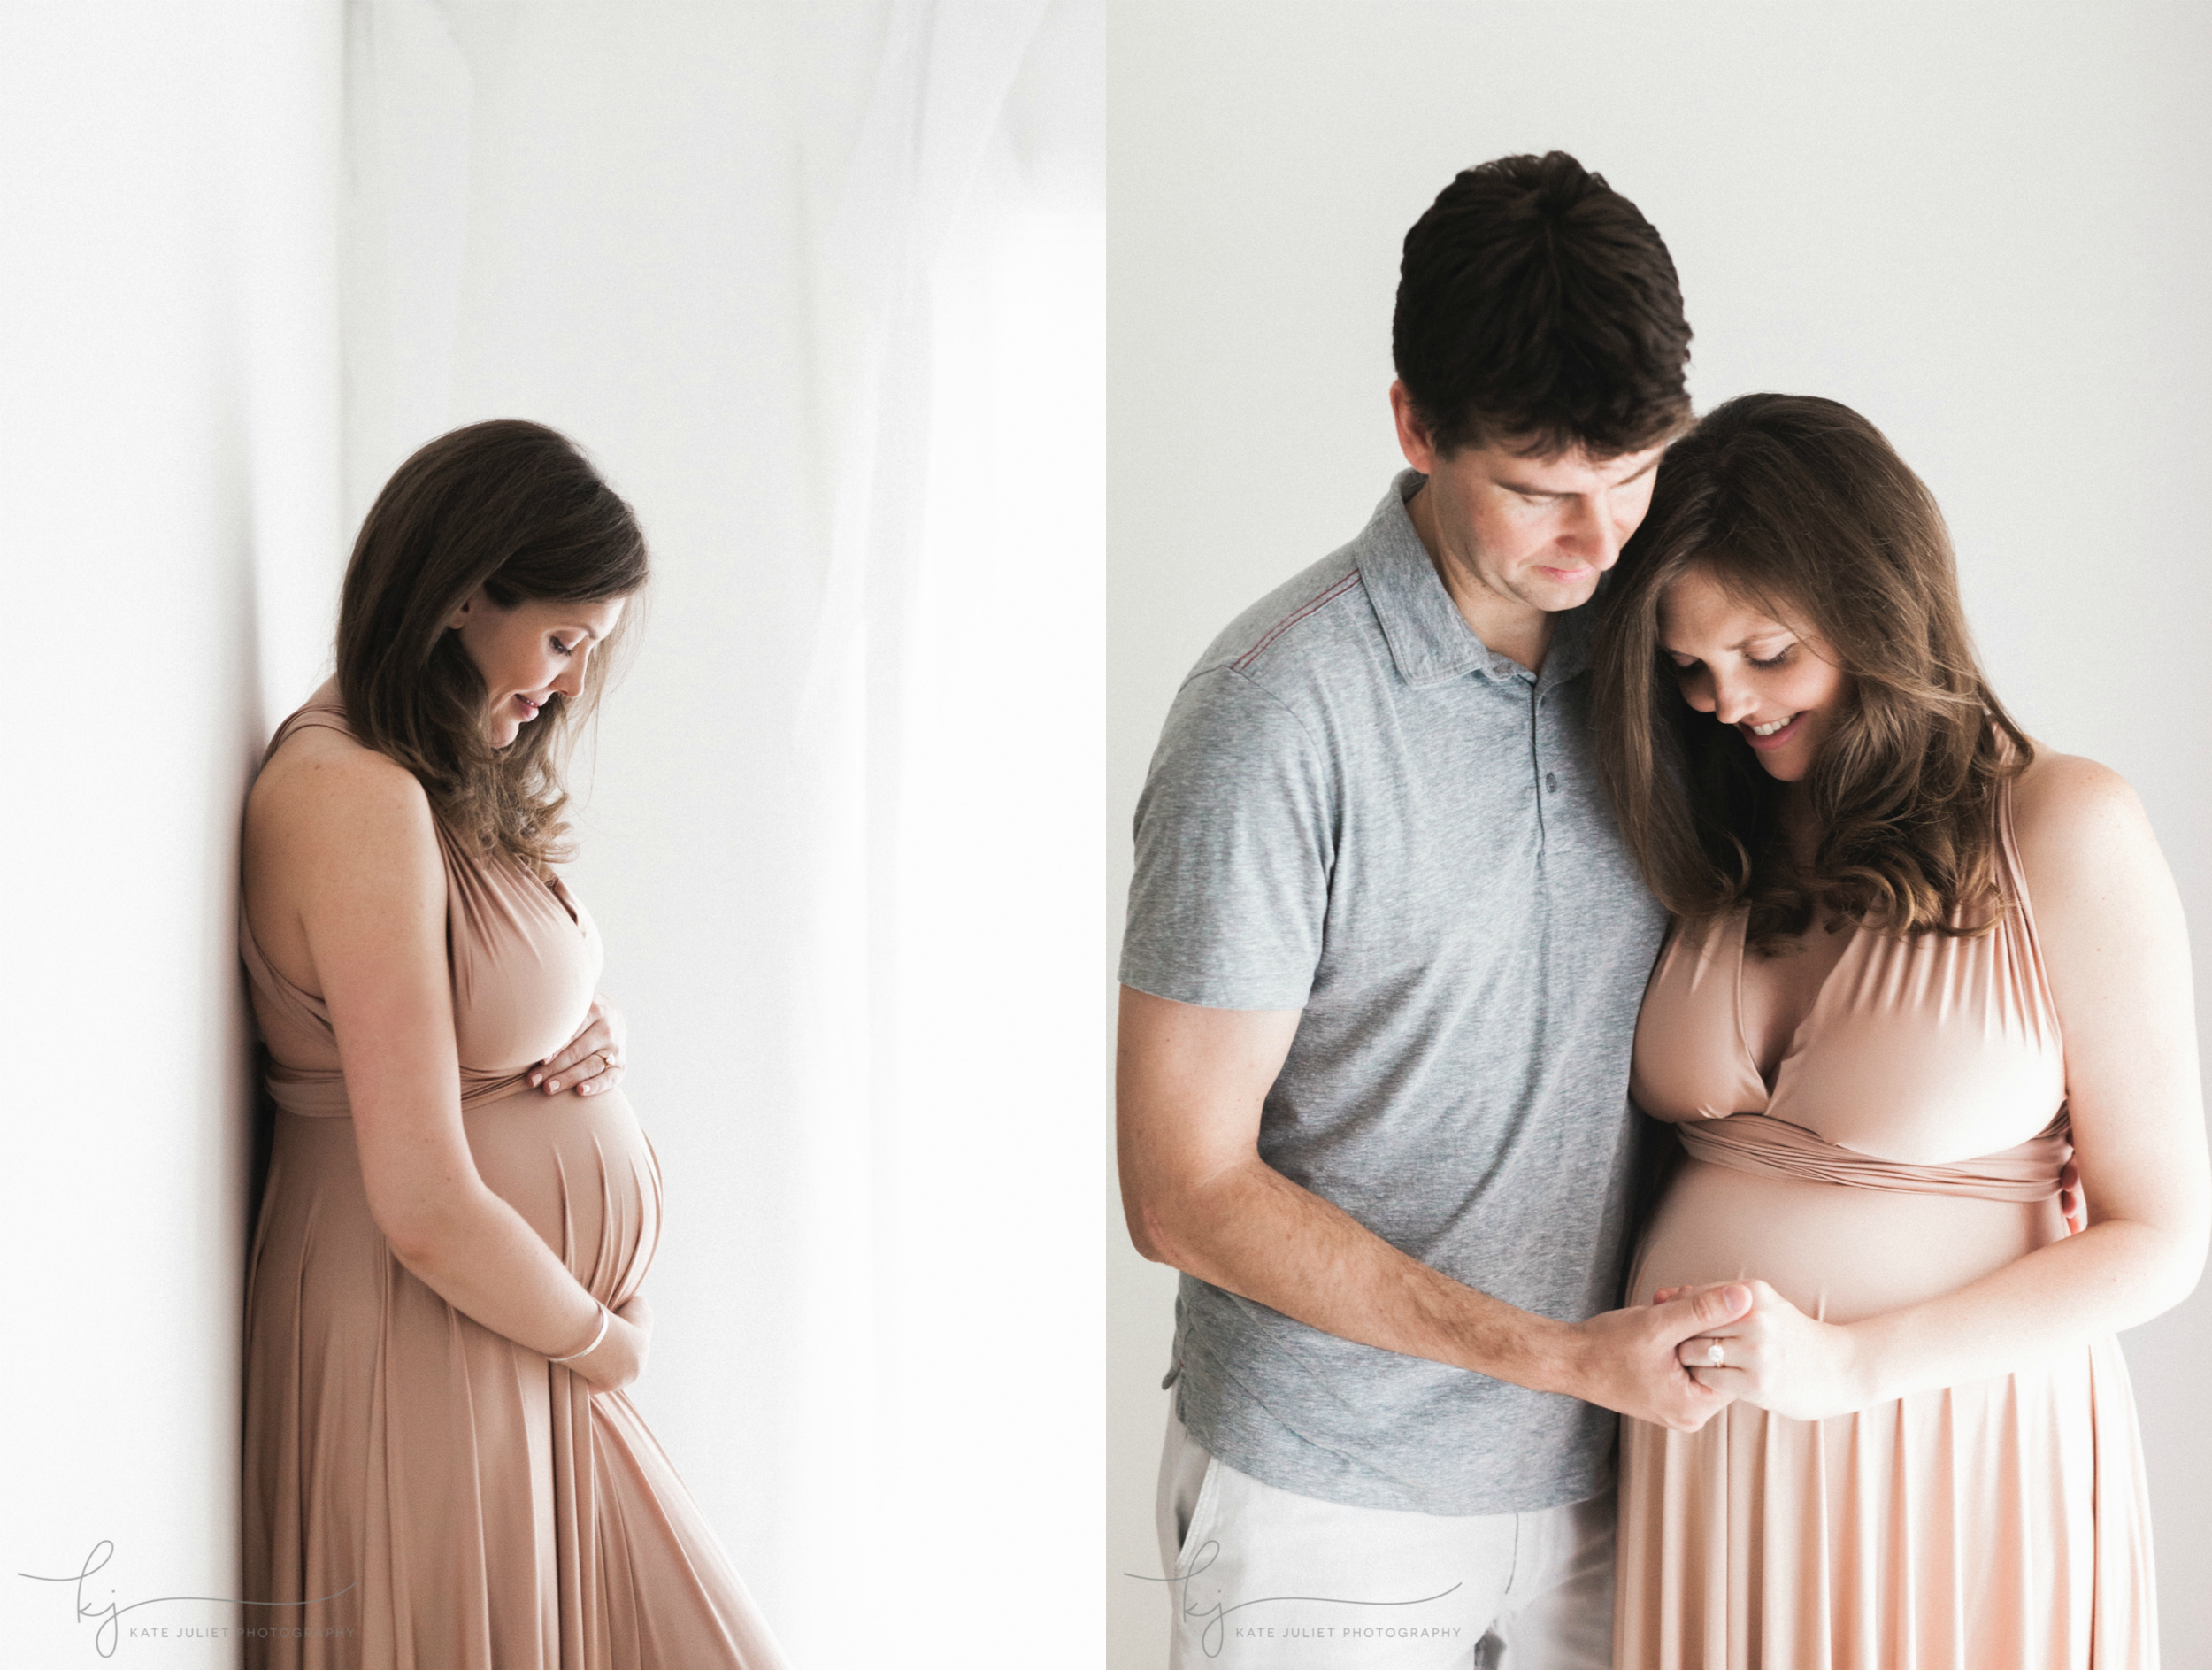 Arlington VA Maternity Photographer | Kate Juliet Photography